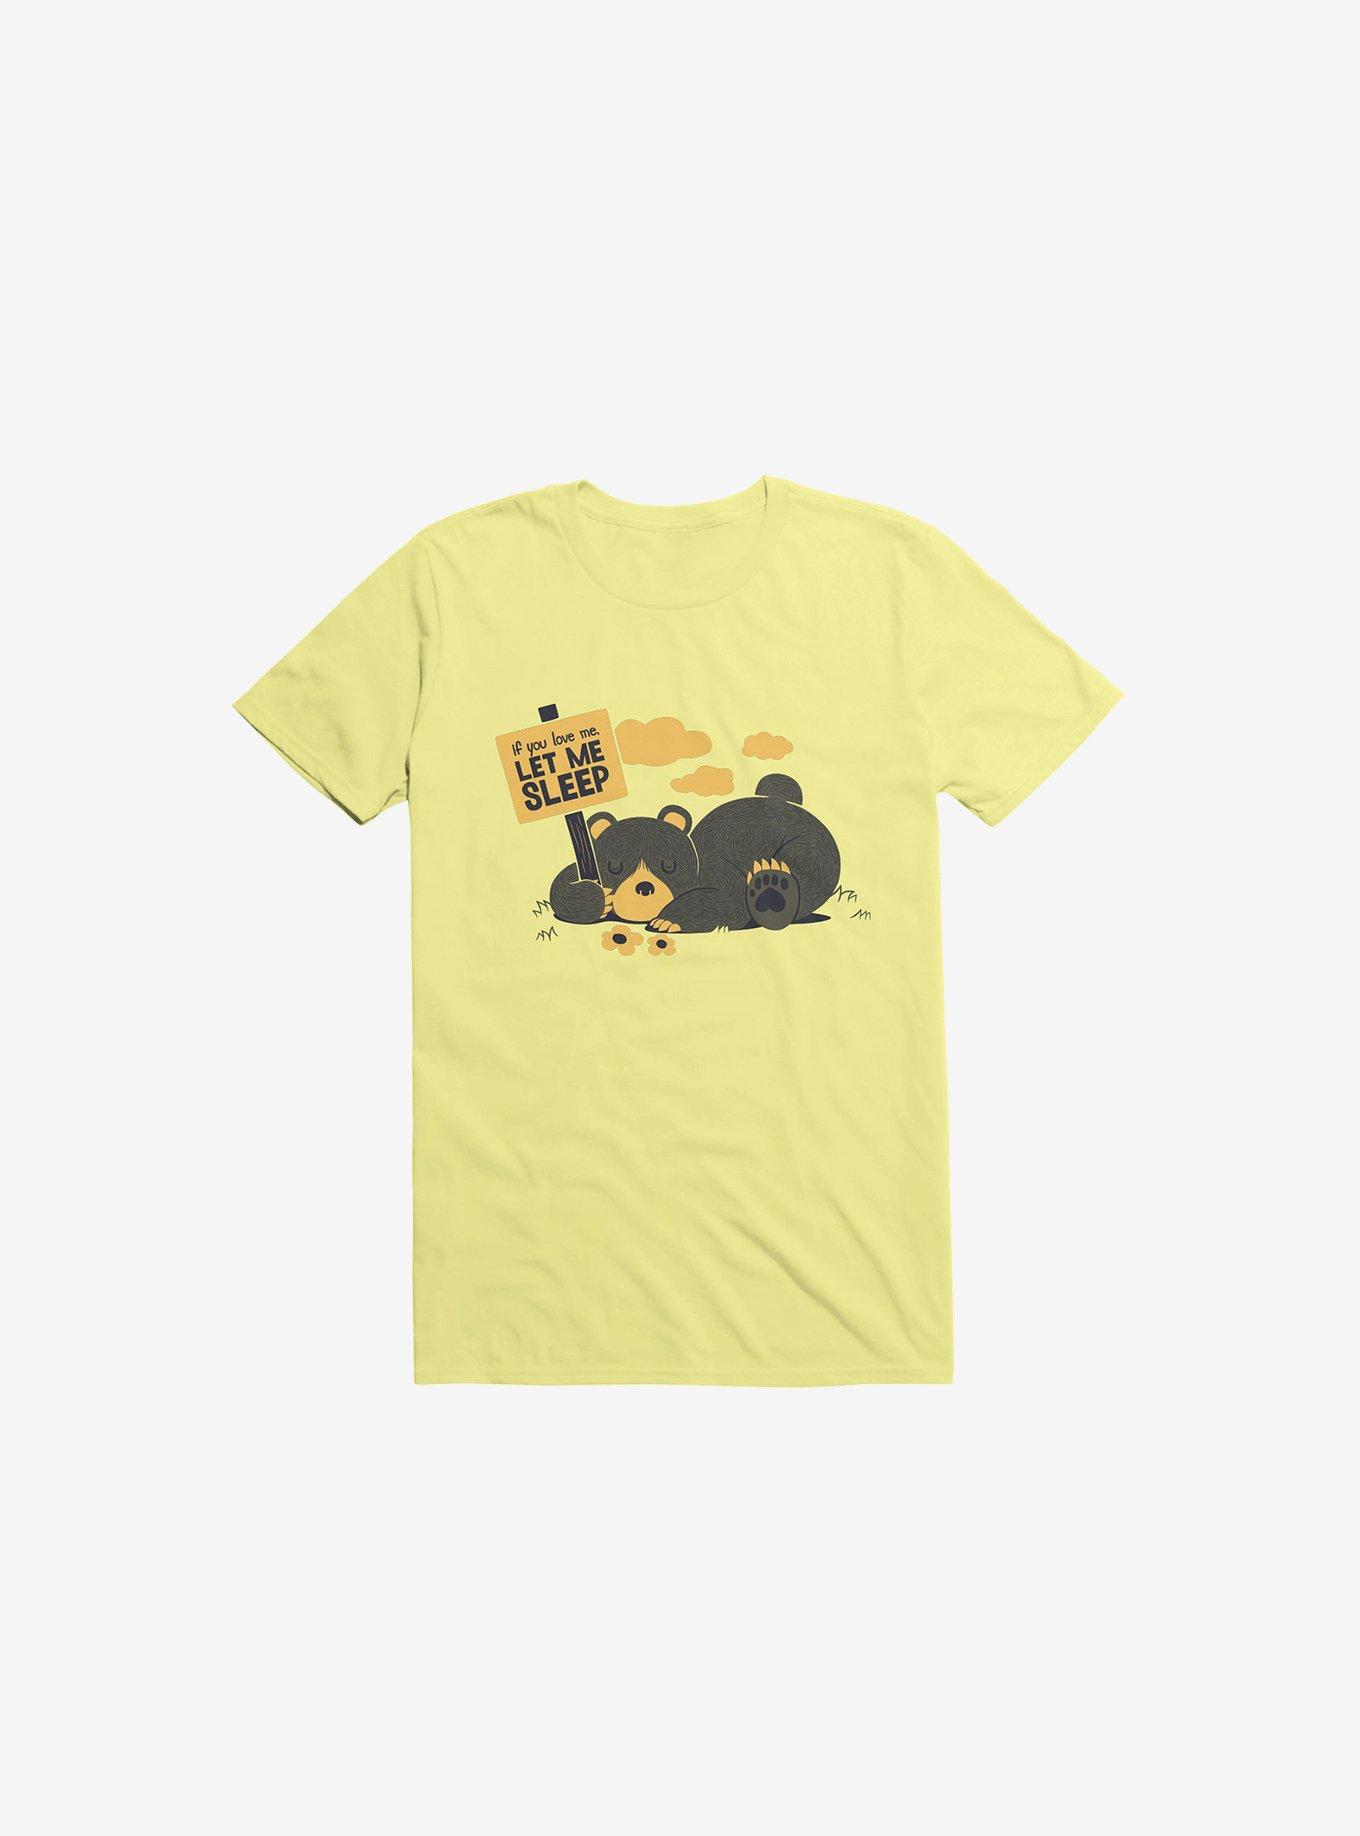 If You Love Me Let Sleep Bear Corn Silk Yellow T-Shirt